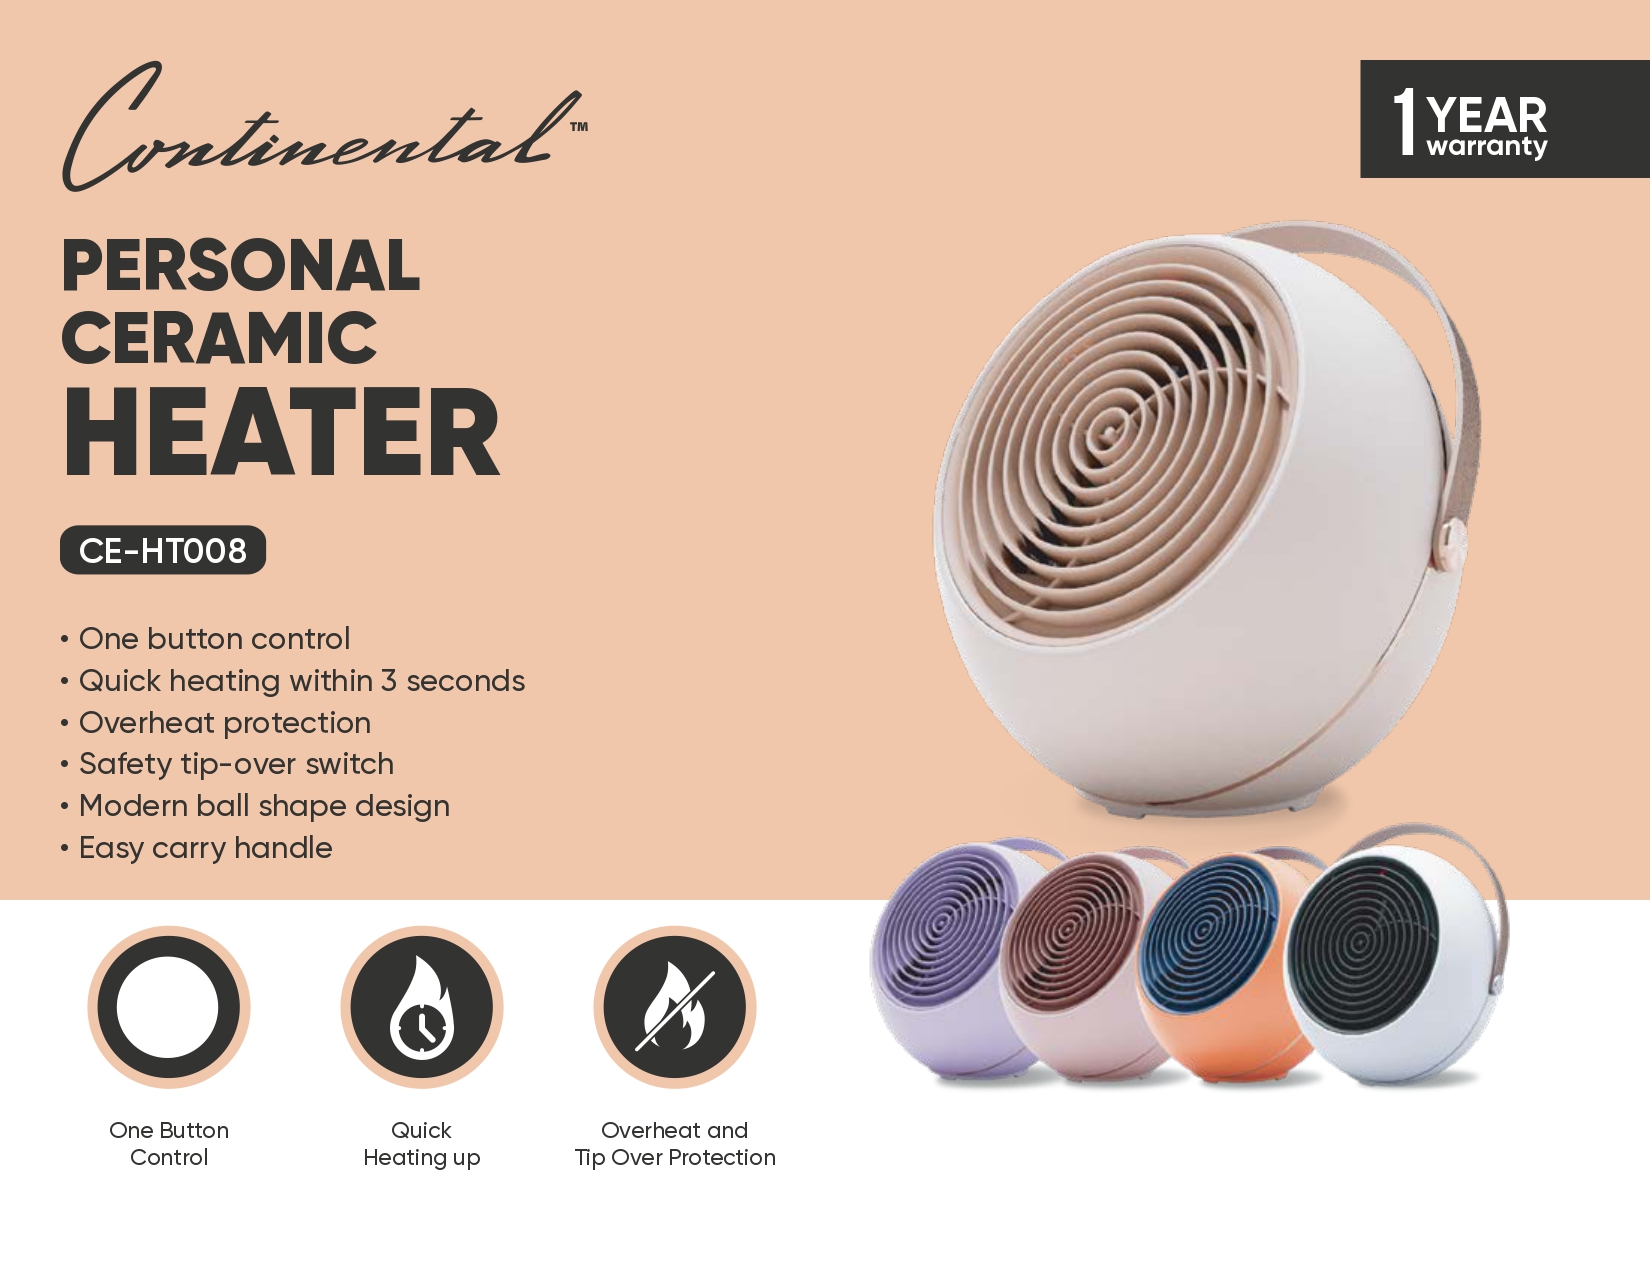 Personal Ceramic Heater